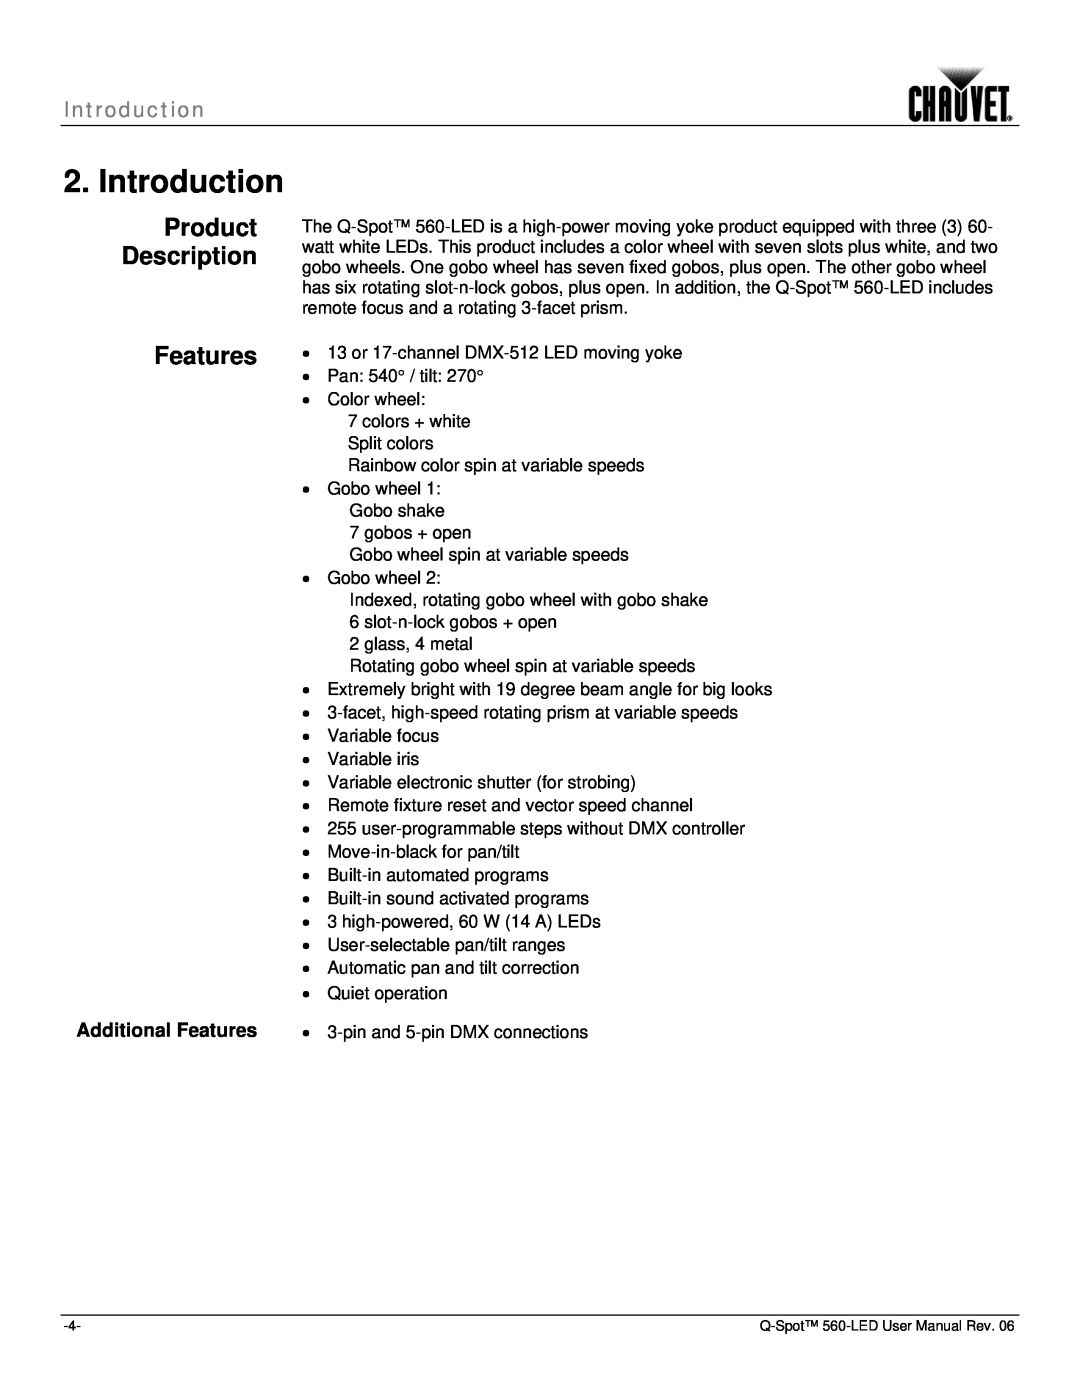 Chauvet 560 user manual Introduction, Product Description, Additional Features 